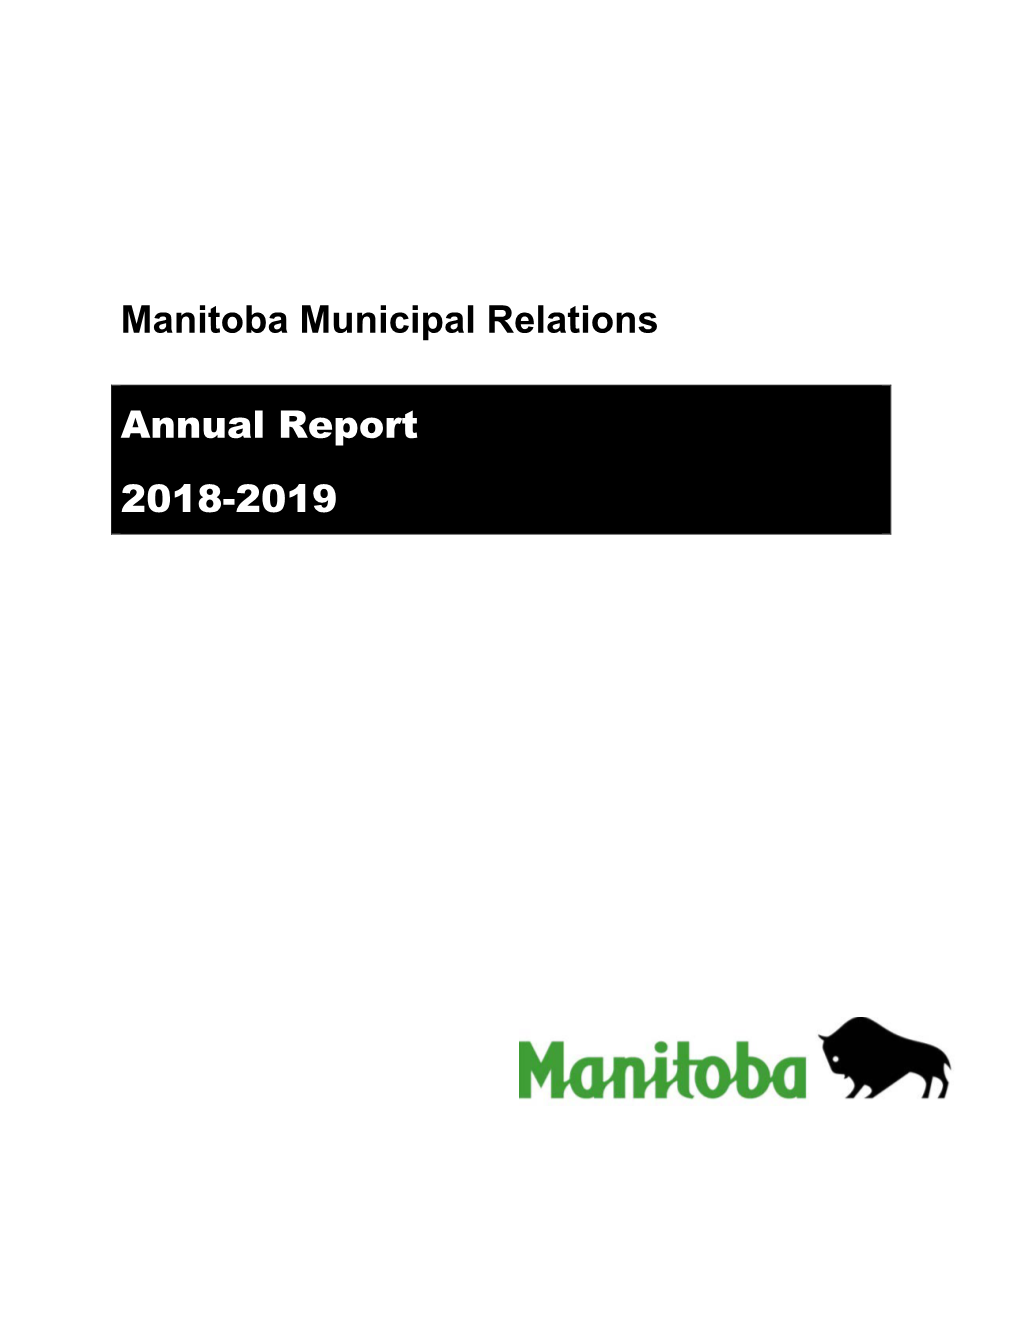 Municipal Relations Annual Report 2018-19